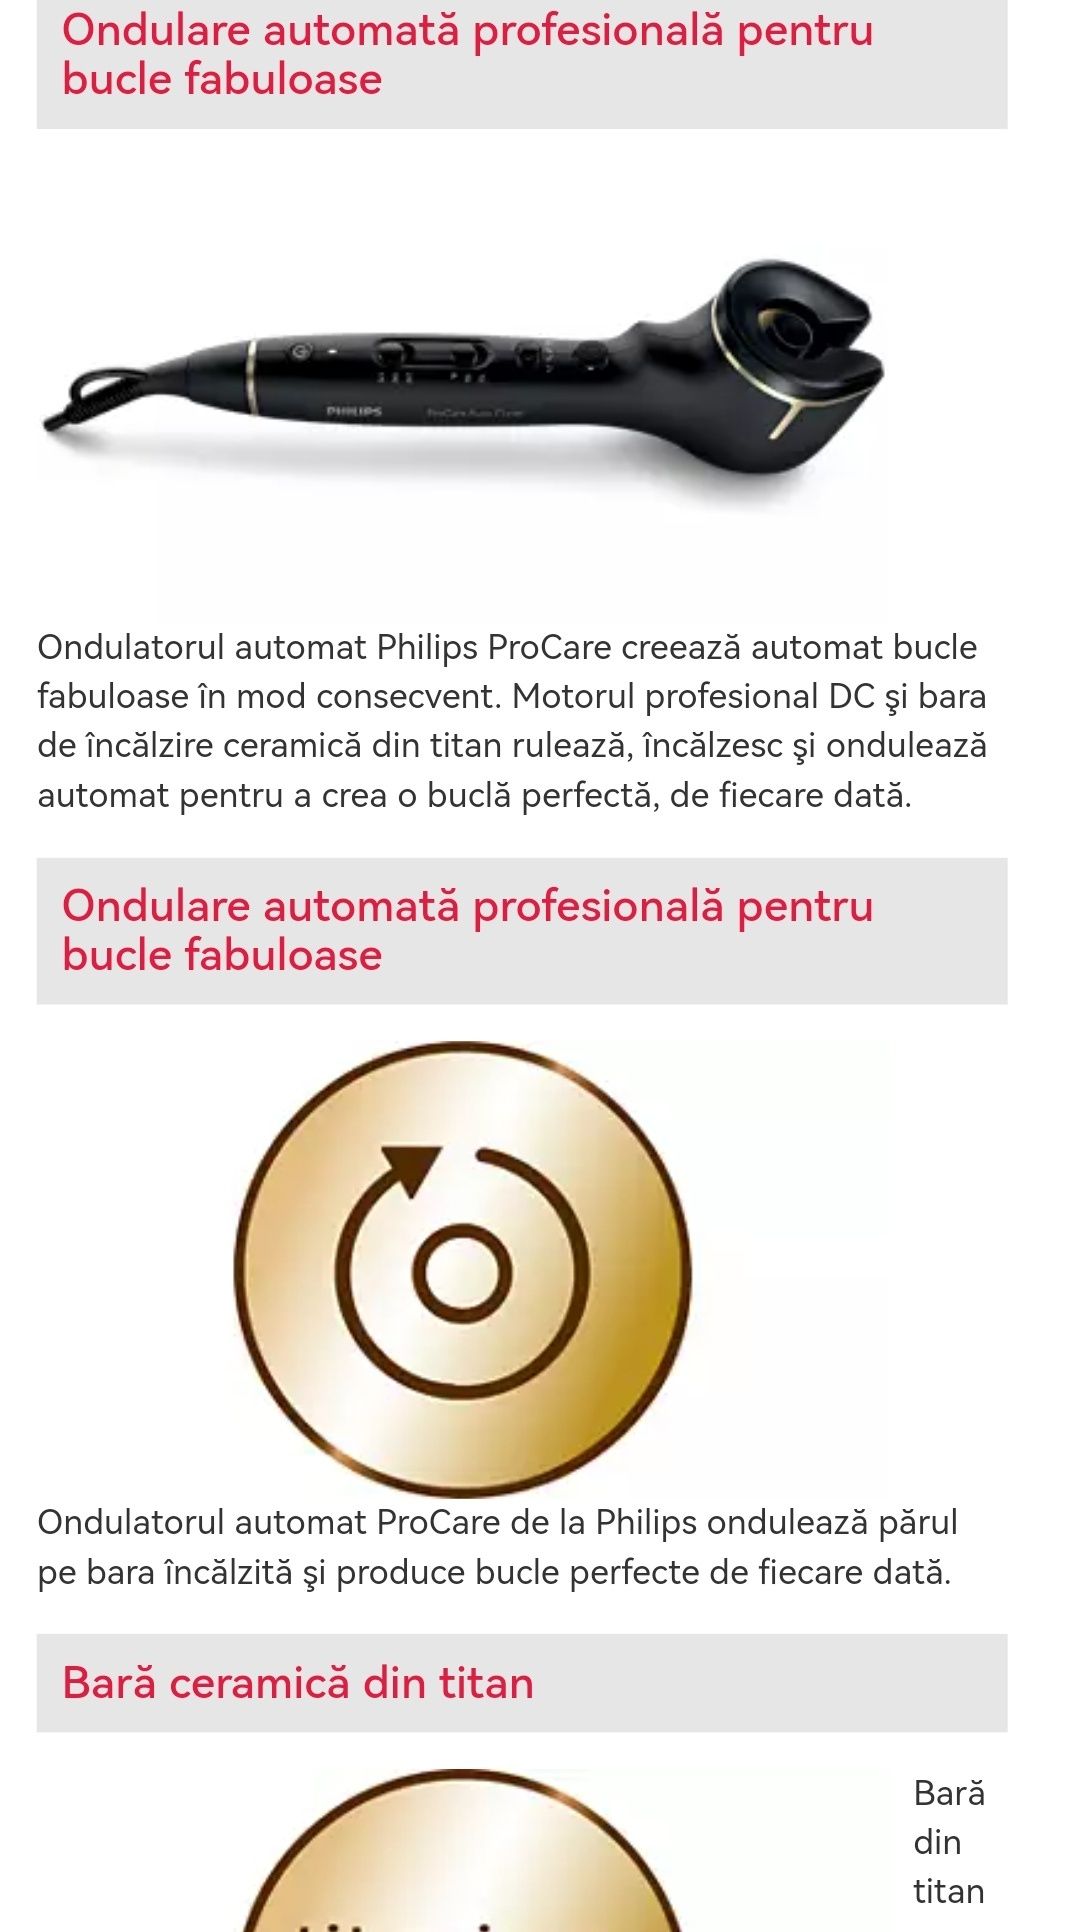 Mouthpiece range At dawn Ondulator complet automat Philips ProCare HPS940 nou Baciu • OLX.ro